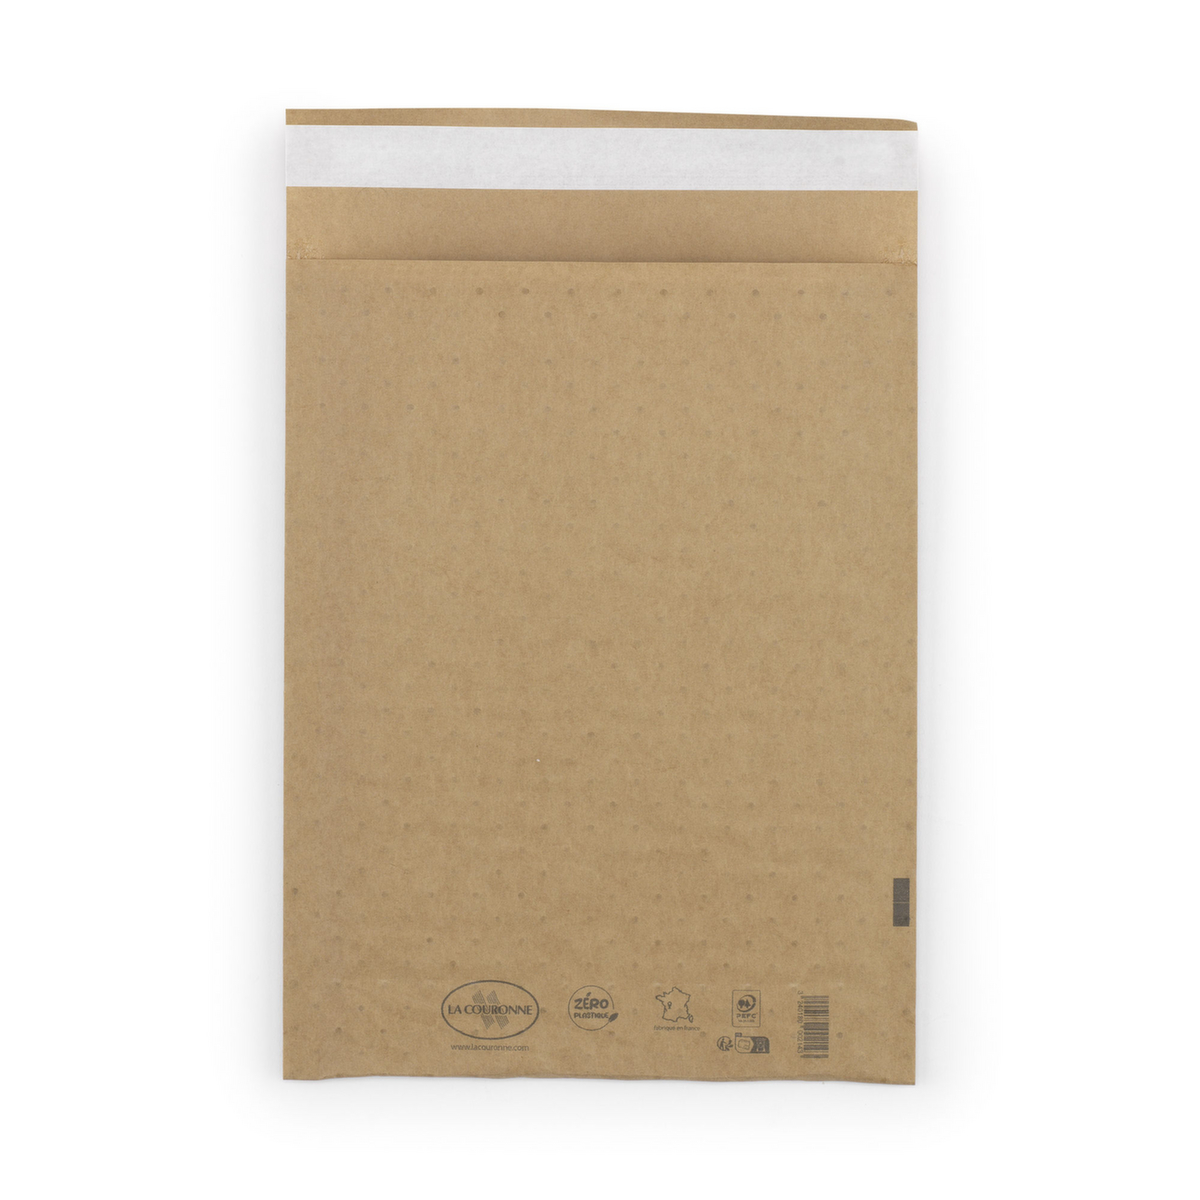 Luftpolsterpapier-Versandtasche Standard 2 ZOOM